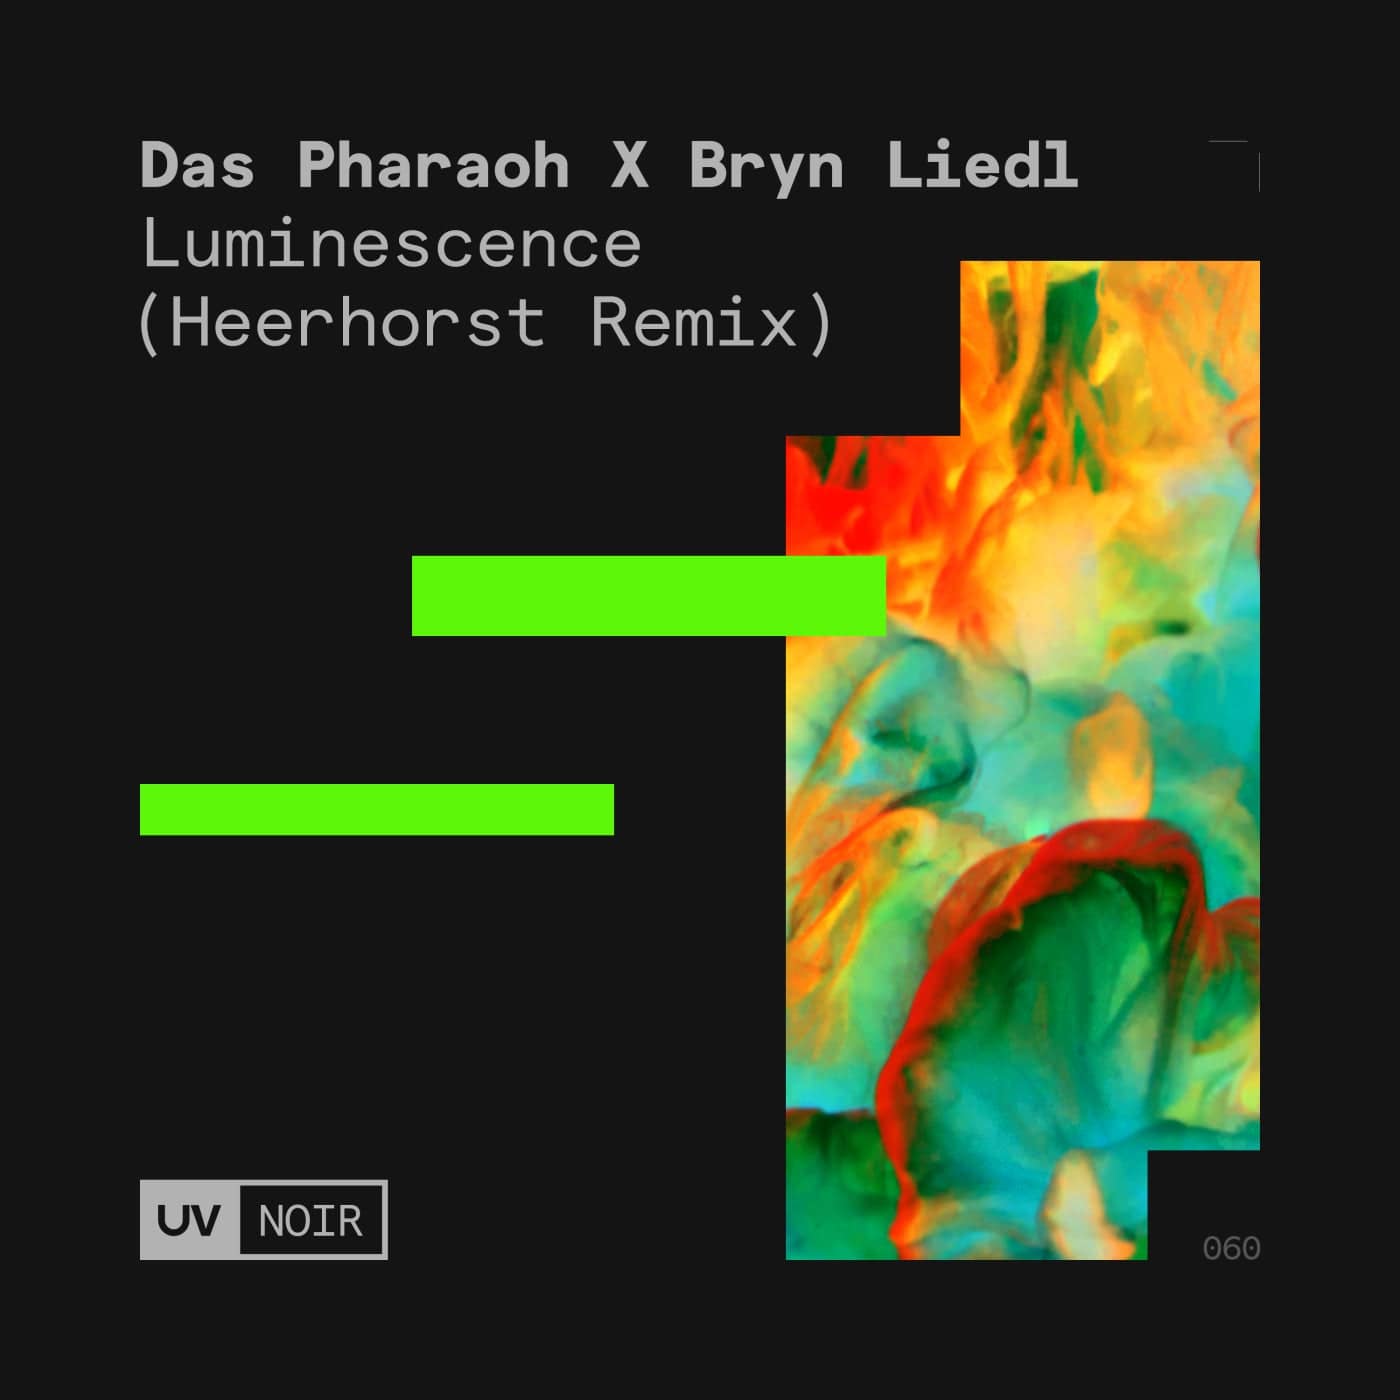 image cover: Bryn Liedl, Das Pharaoh - Luminescence (Heerhorst Remix) / UVN060